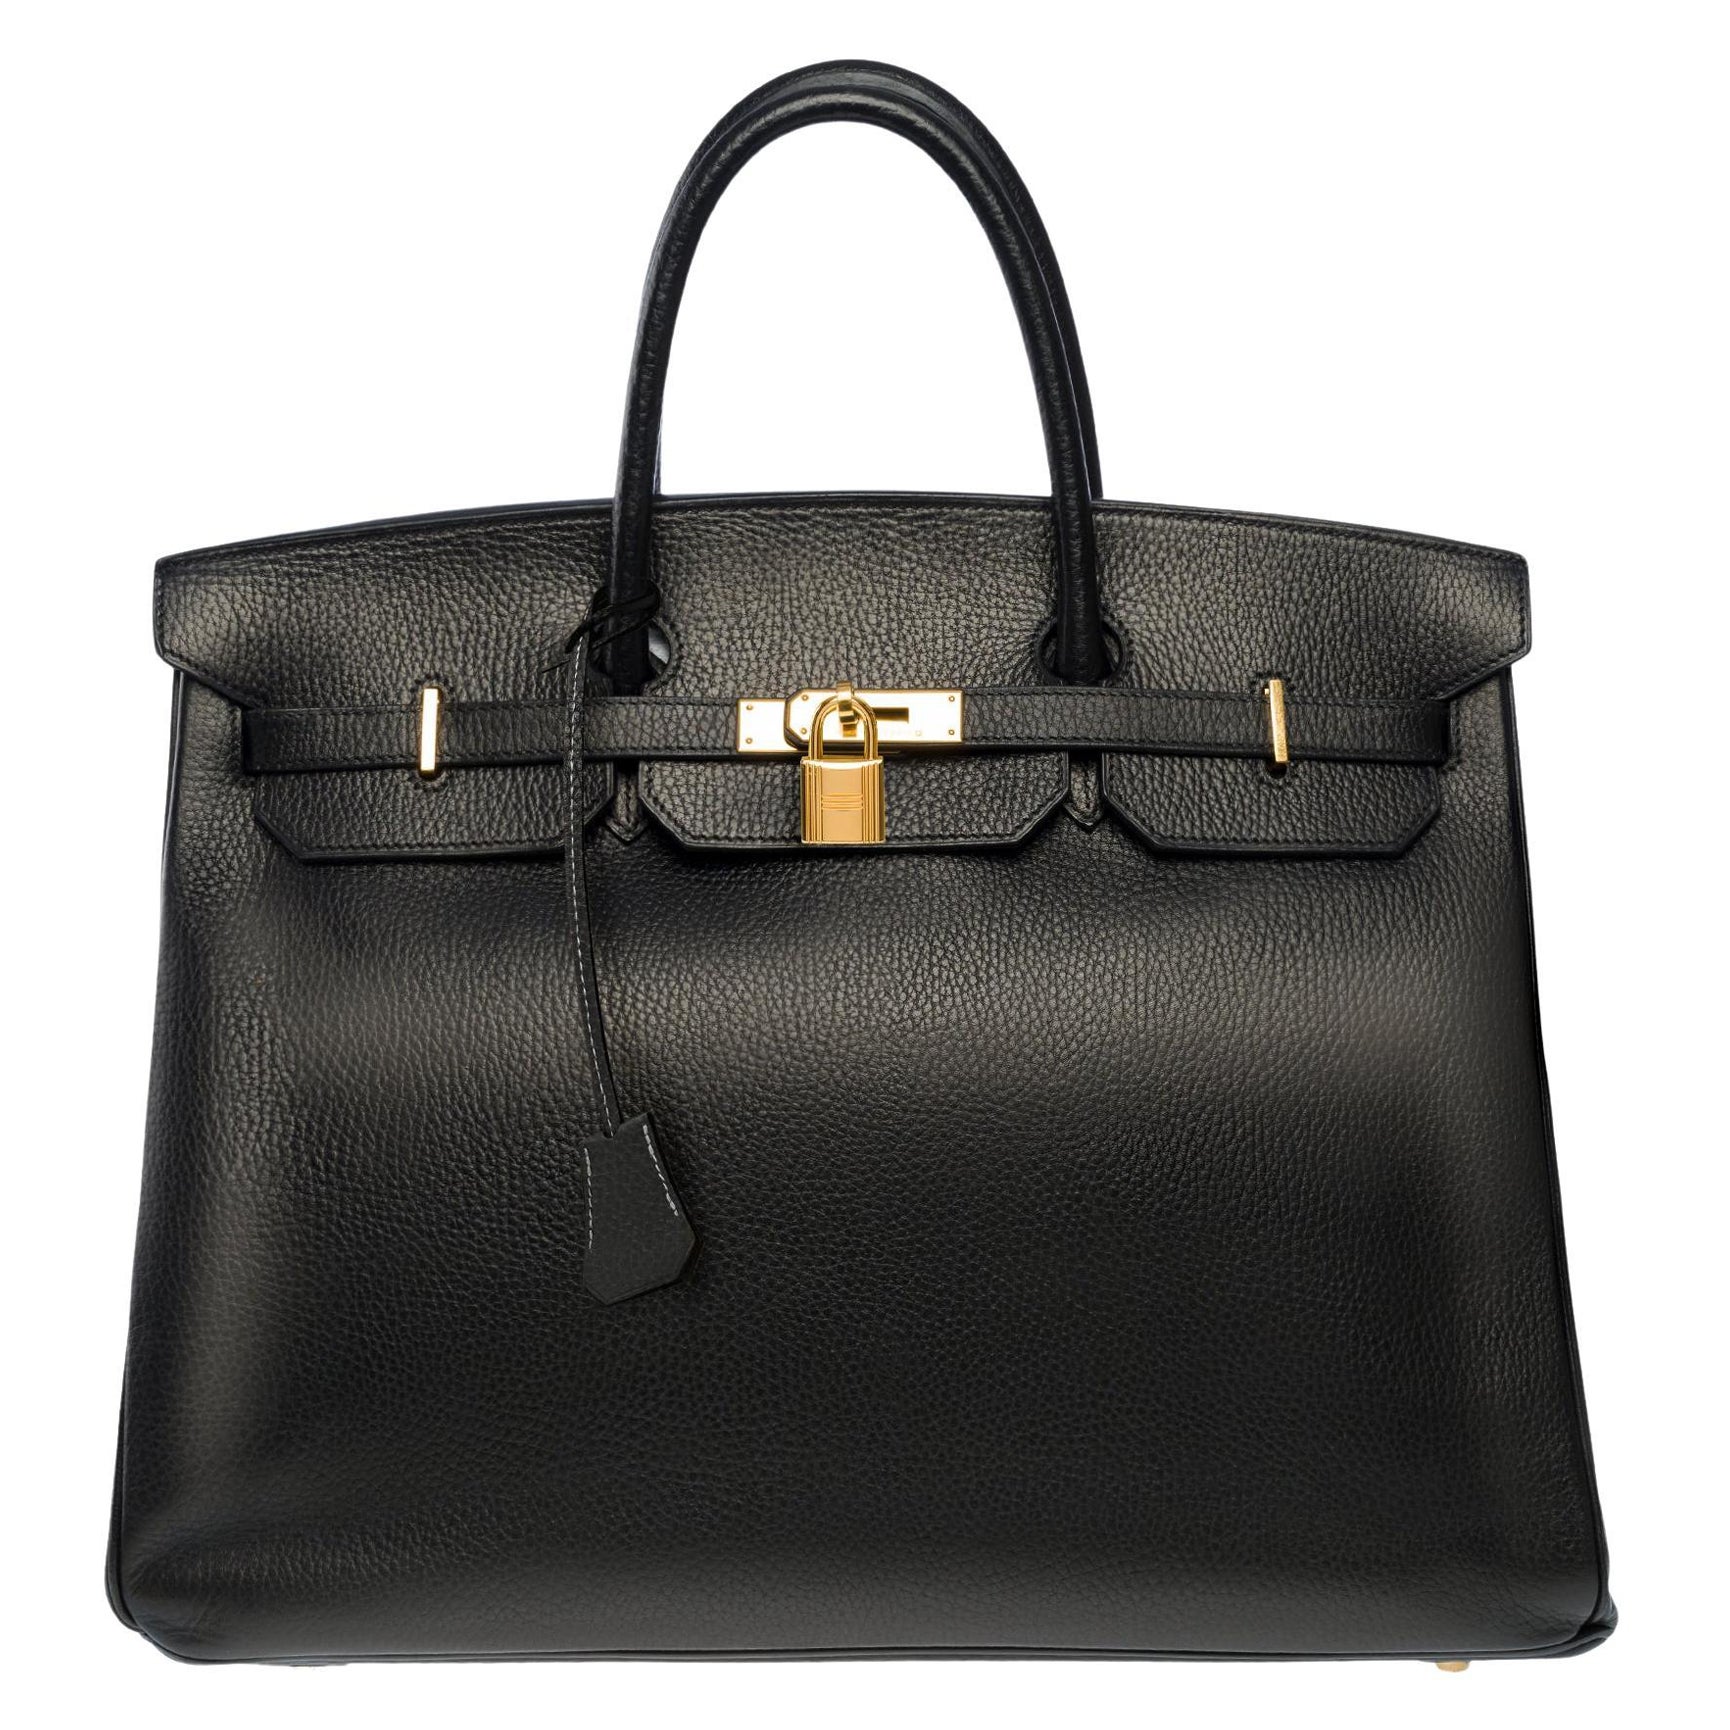 Classy Hermes Birkin 40cm handbag in Black Vache Ardennes Calf leather, GHW